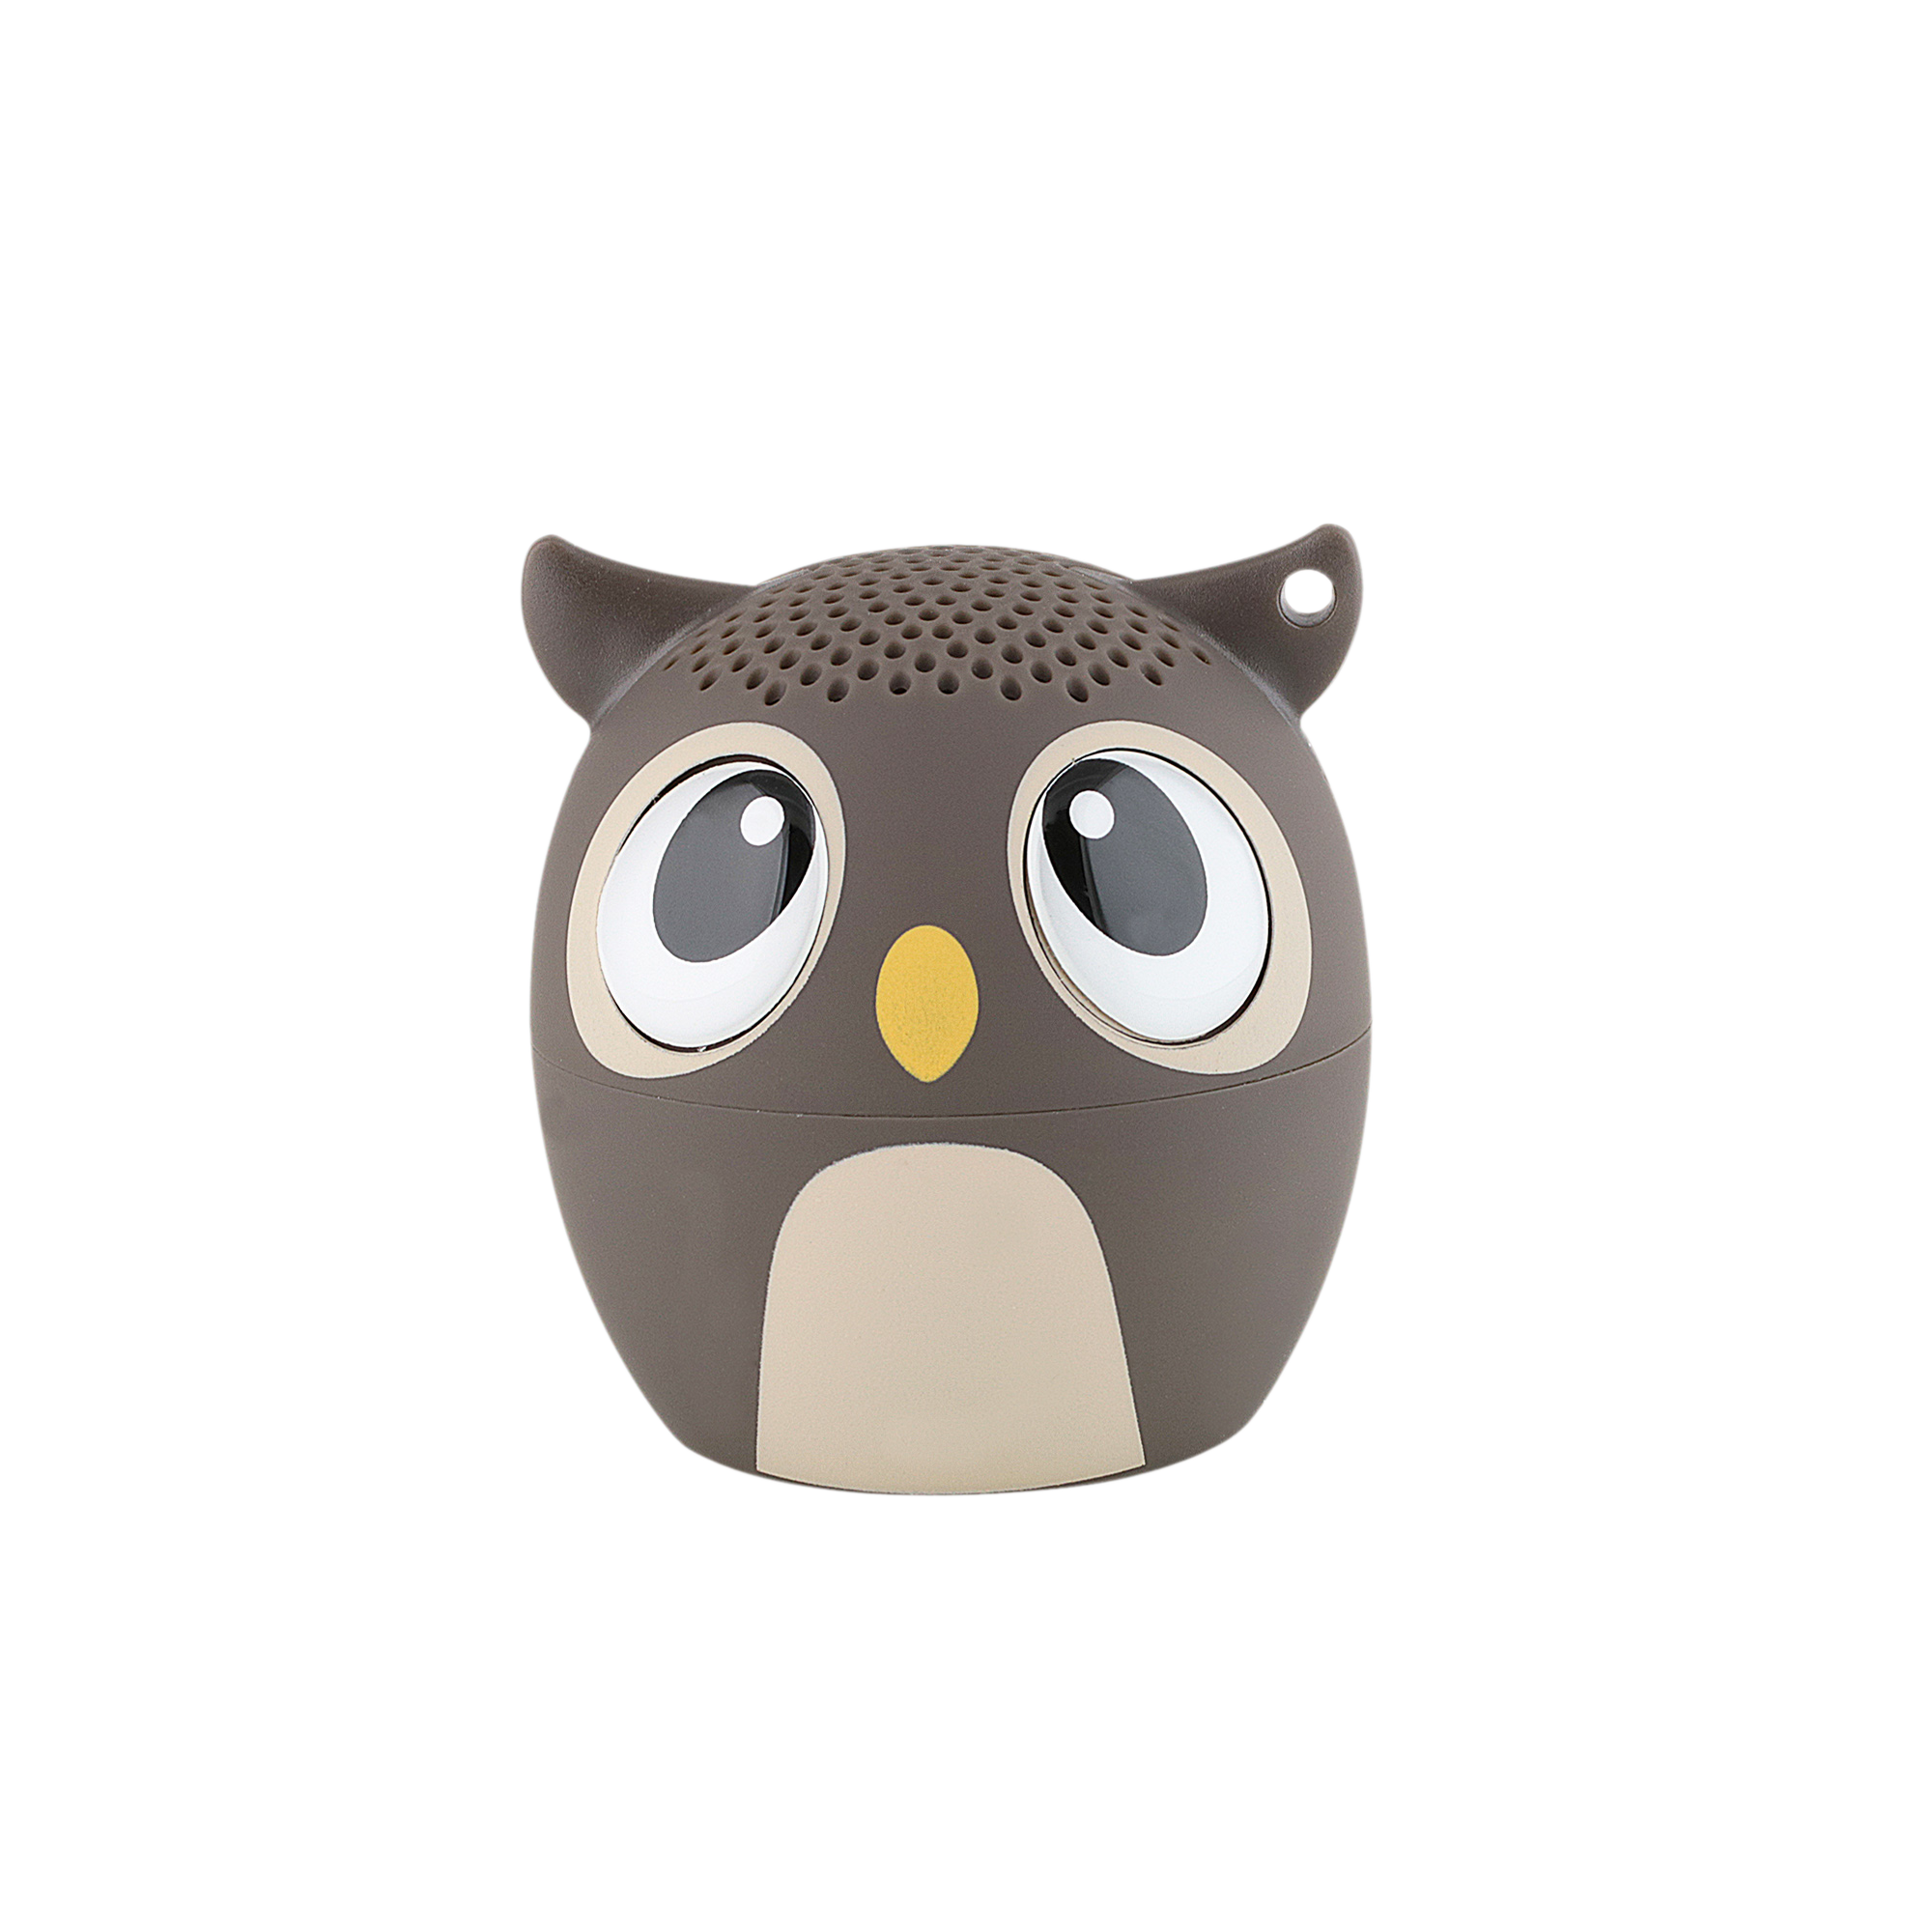 My Audio Pet: Bluetooth Animal Speaker - Brown Owl